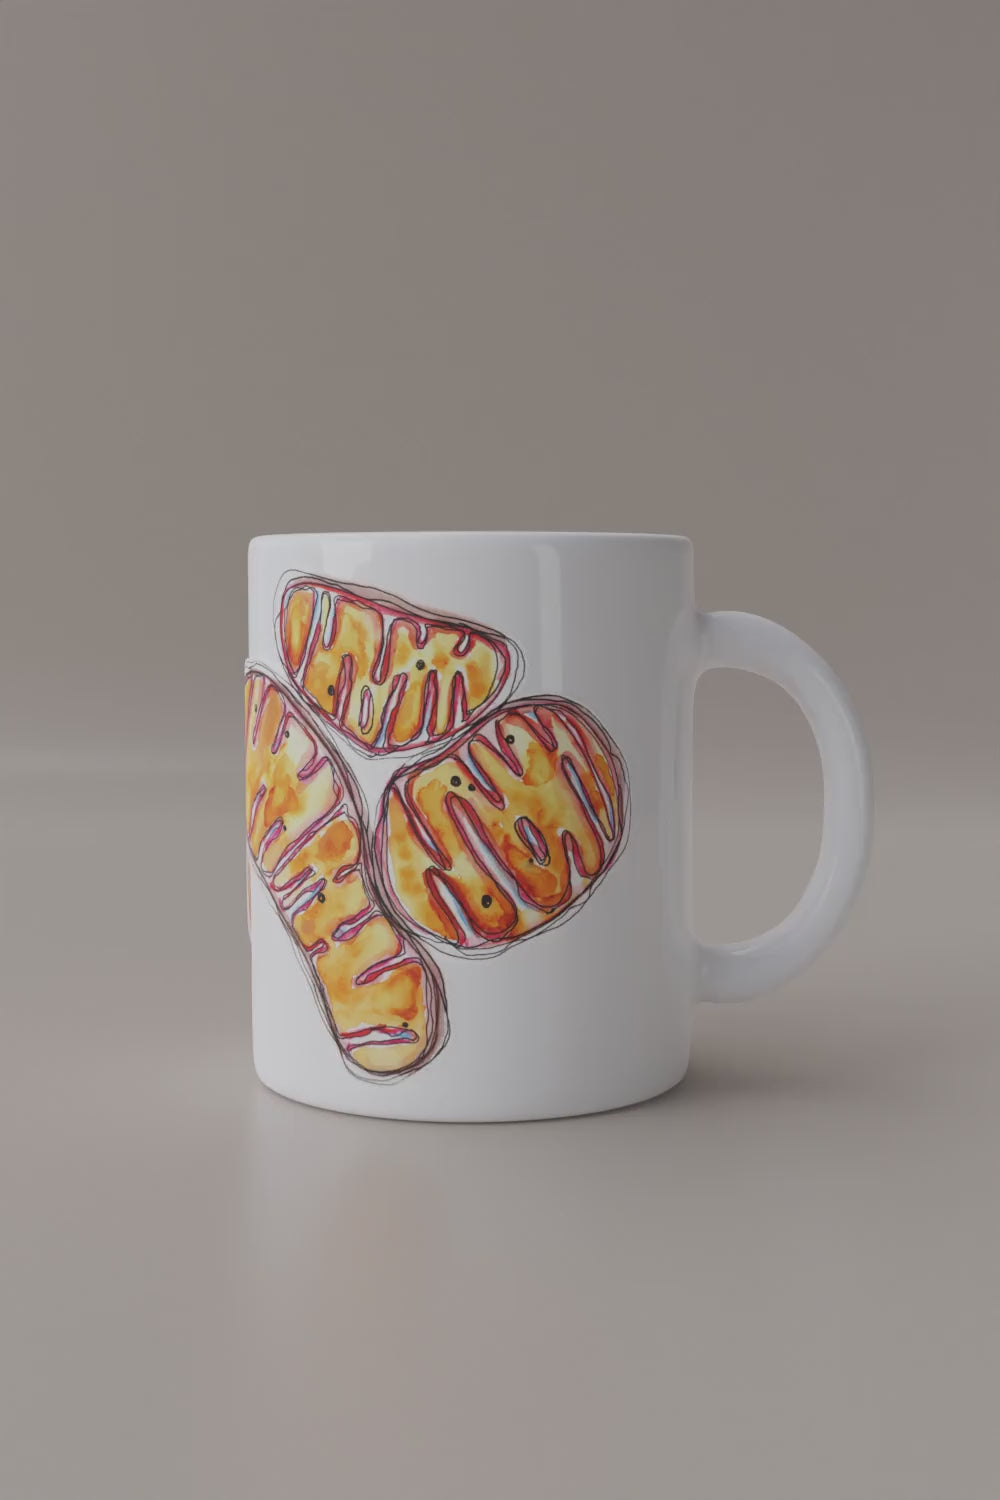 mitochondria mug rotation video by ontogenie